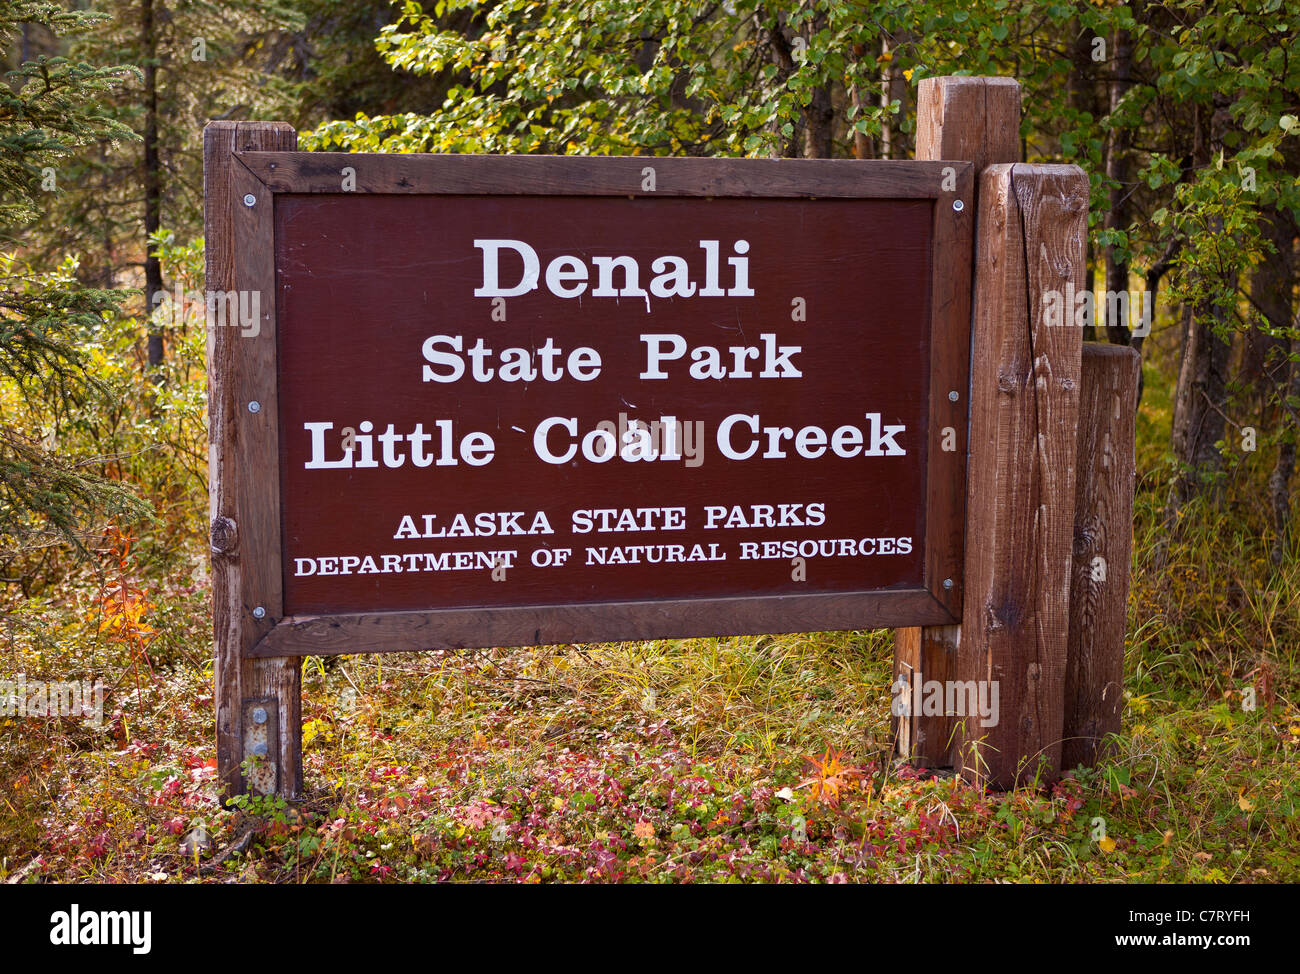 DENALI STATE PARK, ALASKA, USA - Sign for Denali State Park, Little Coal Creek hiking trailhead. Stock Photo